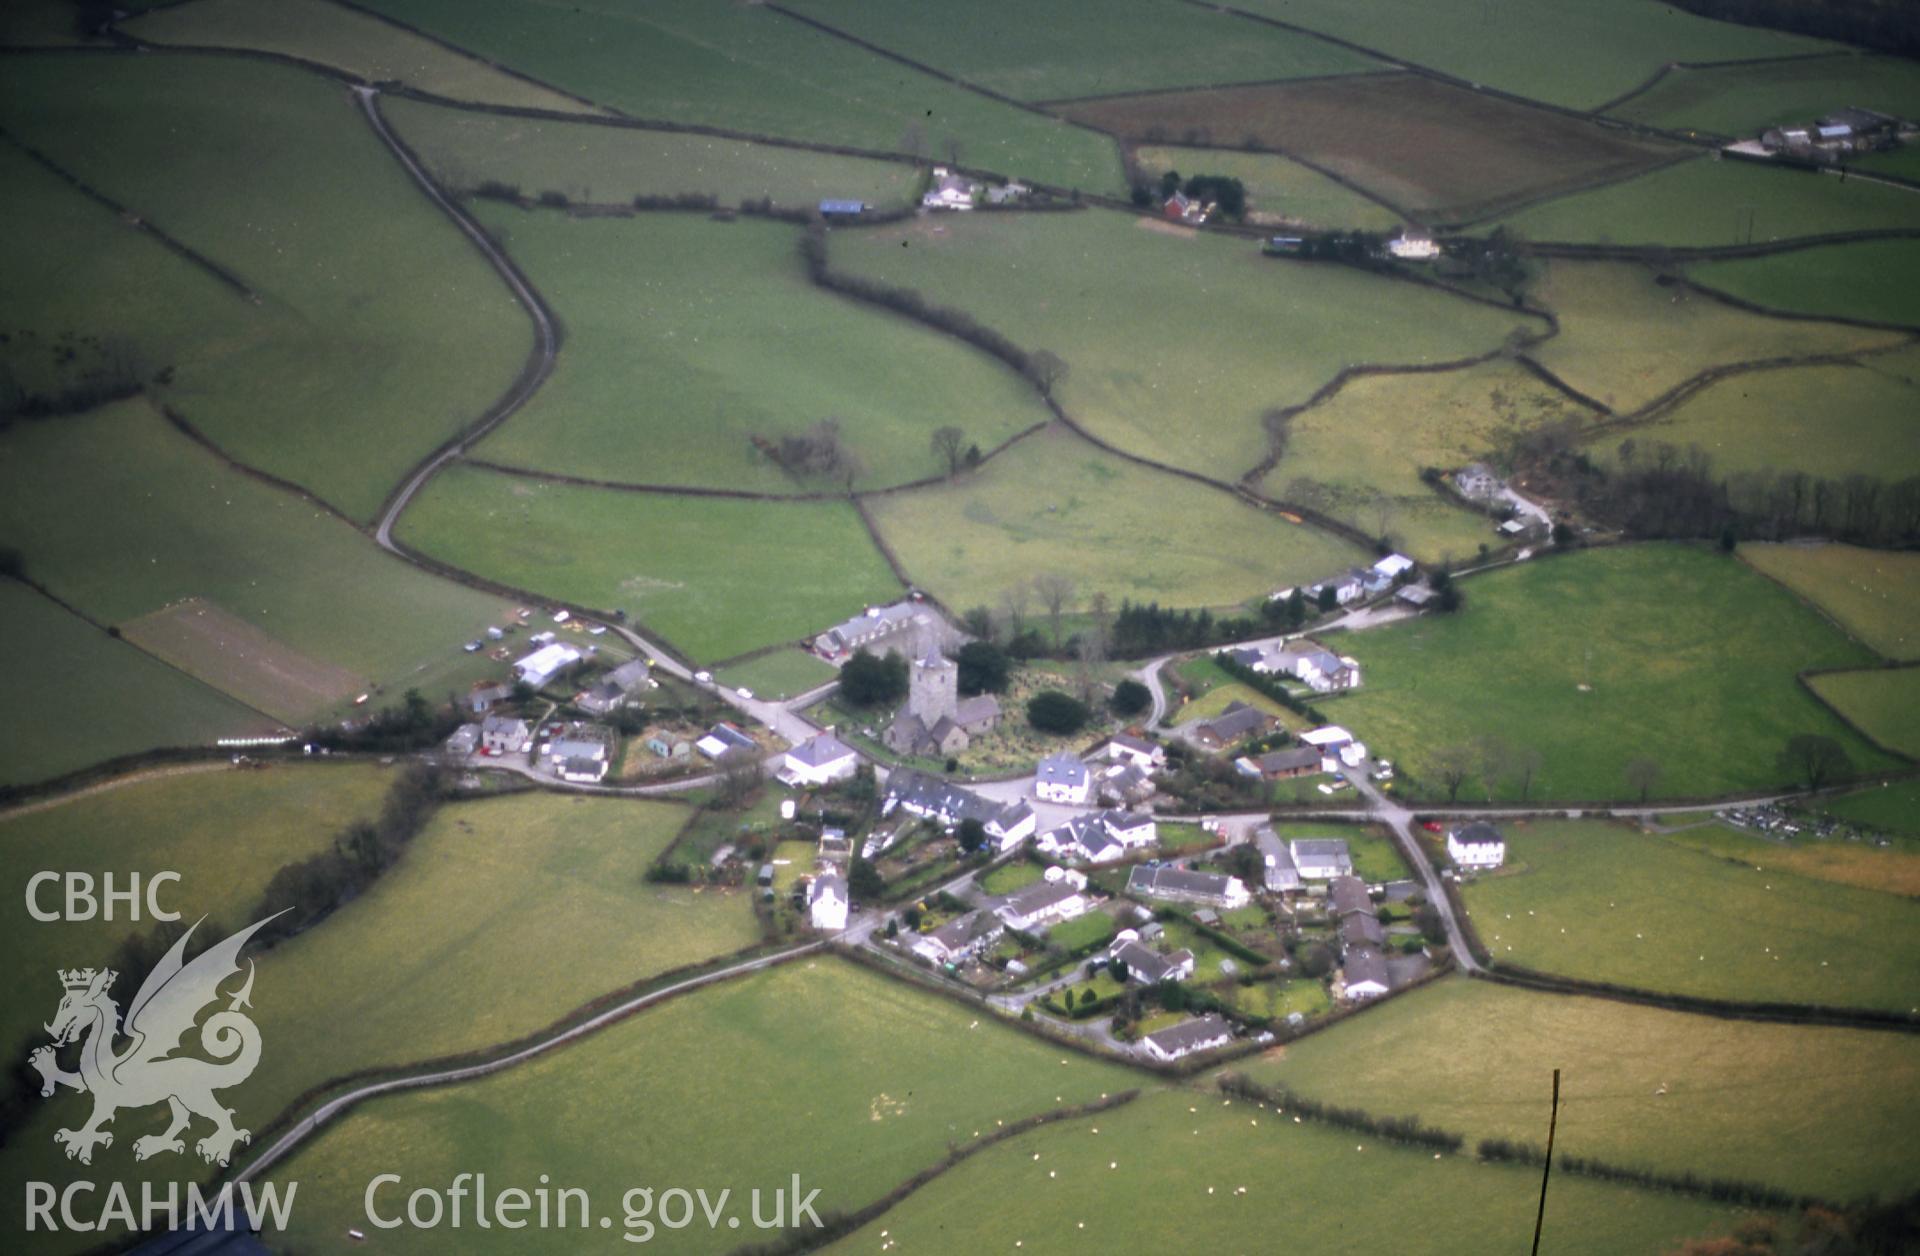 RCAHMW colour slide oblique aerial photograph of Llanfihangel-y-creuddyn, taken on 19/03/1999 by Toby Driver